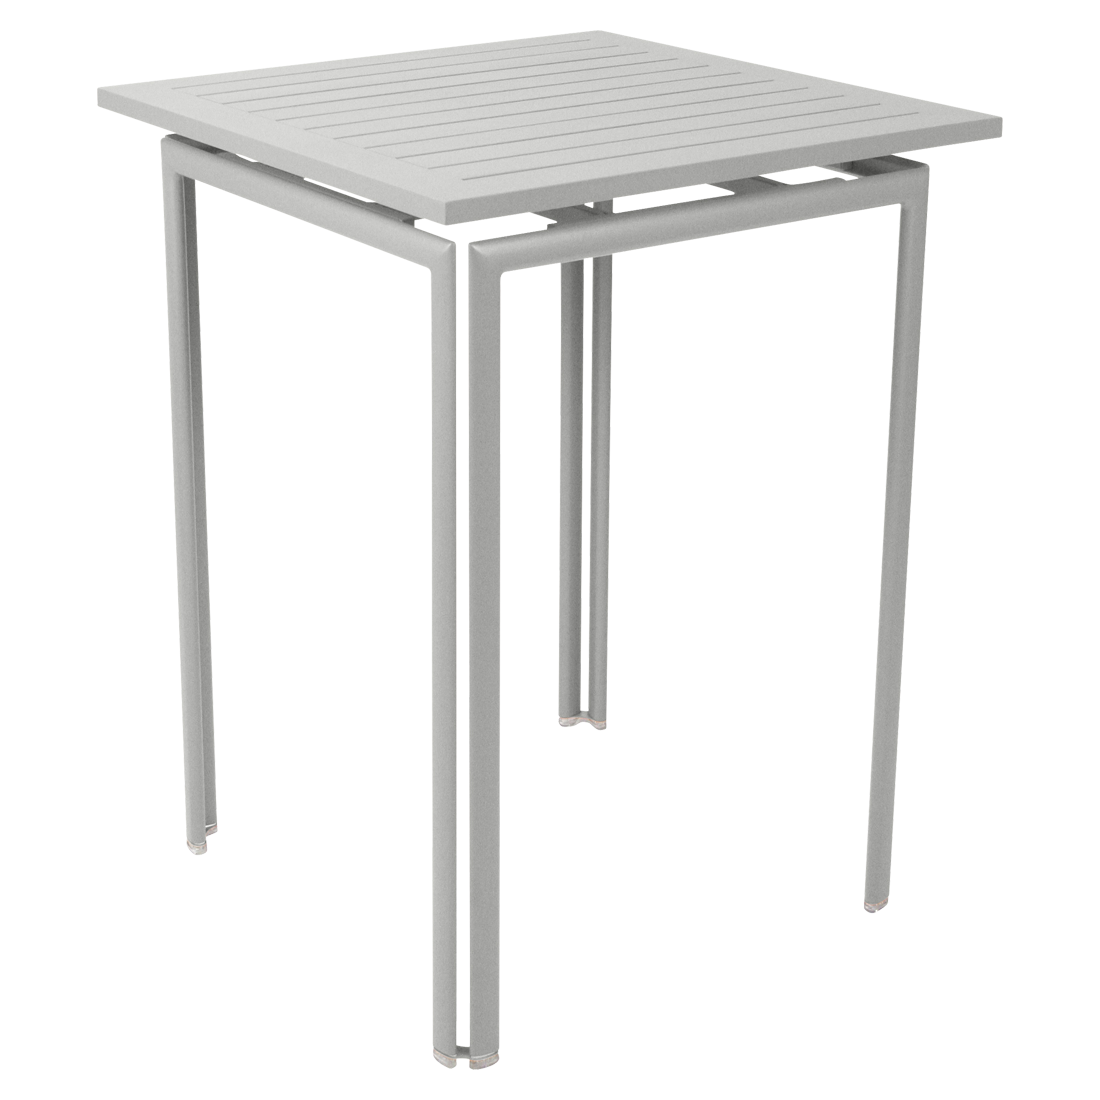 COSTA / HIGH TABLE 80 X 80 CM